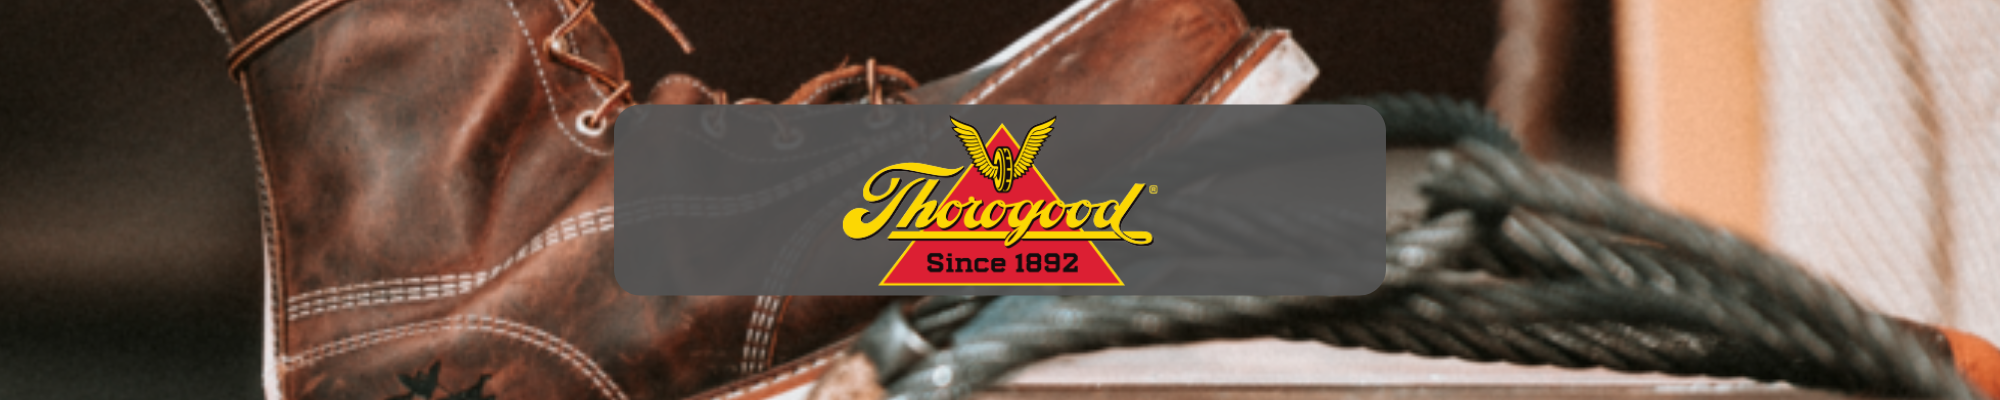 Thorogood Boots Logo